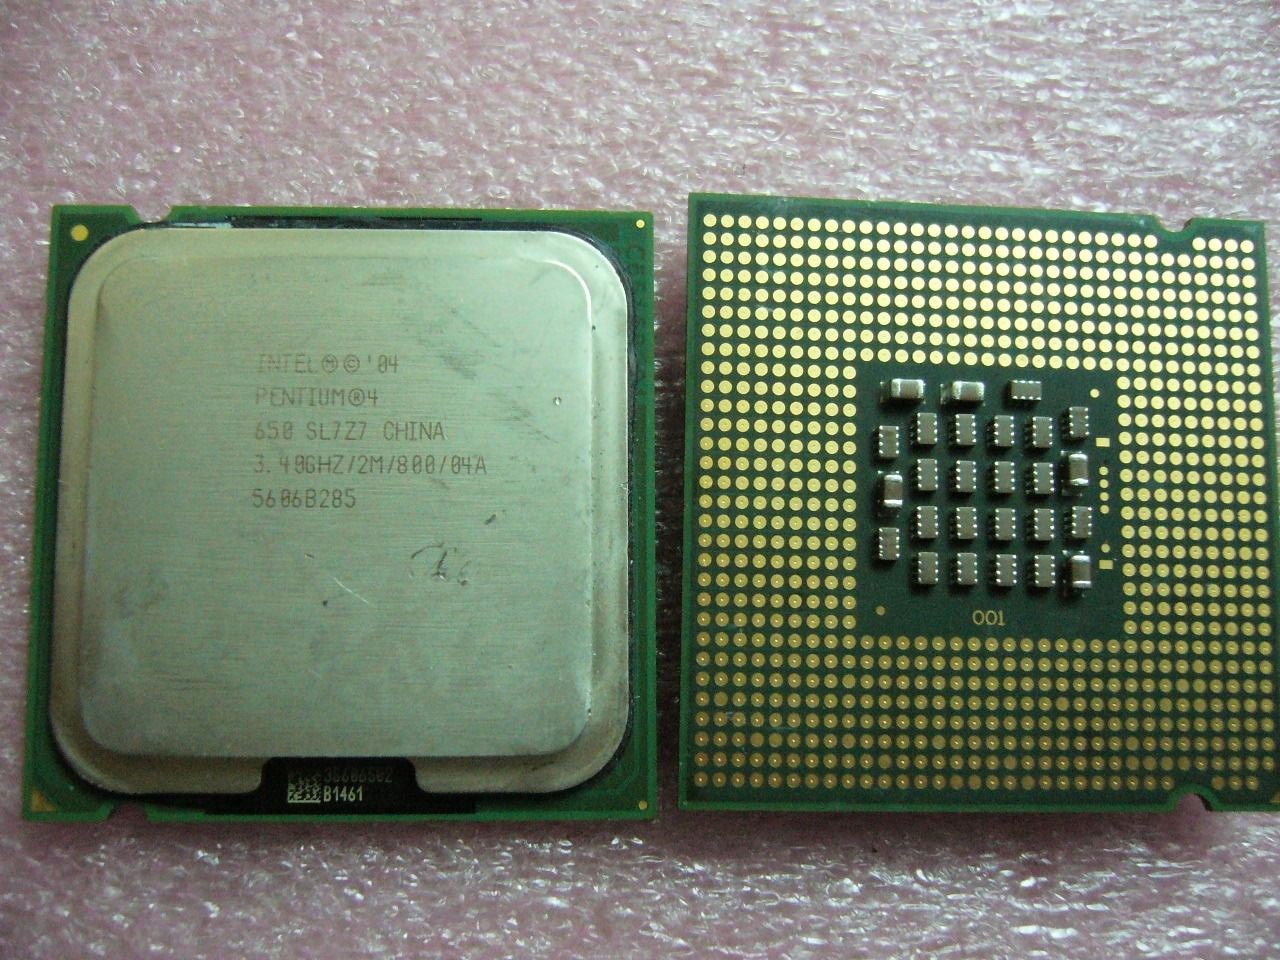 INTEL Pentium 4 CPU 650 3.40GHz 2MB/800Mhz LGA775 SL7Z7 SL8Q5